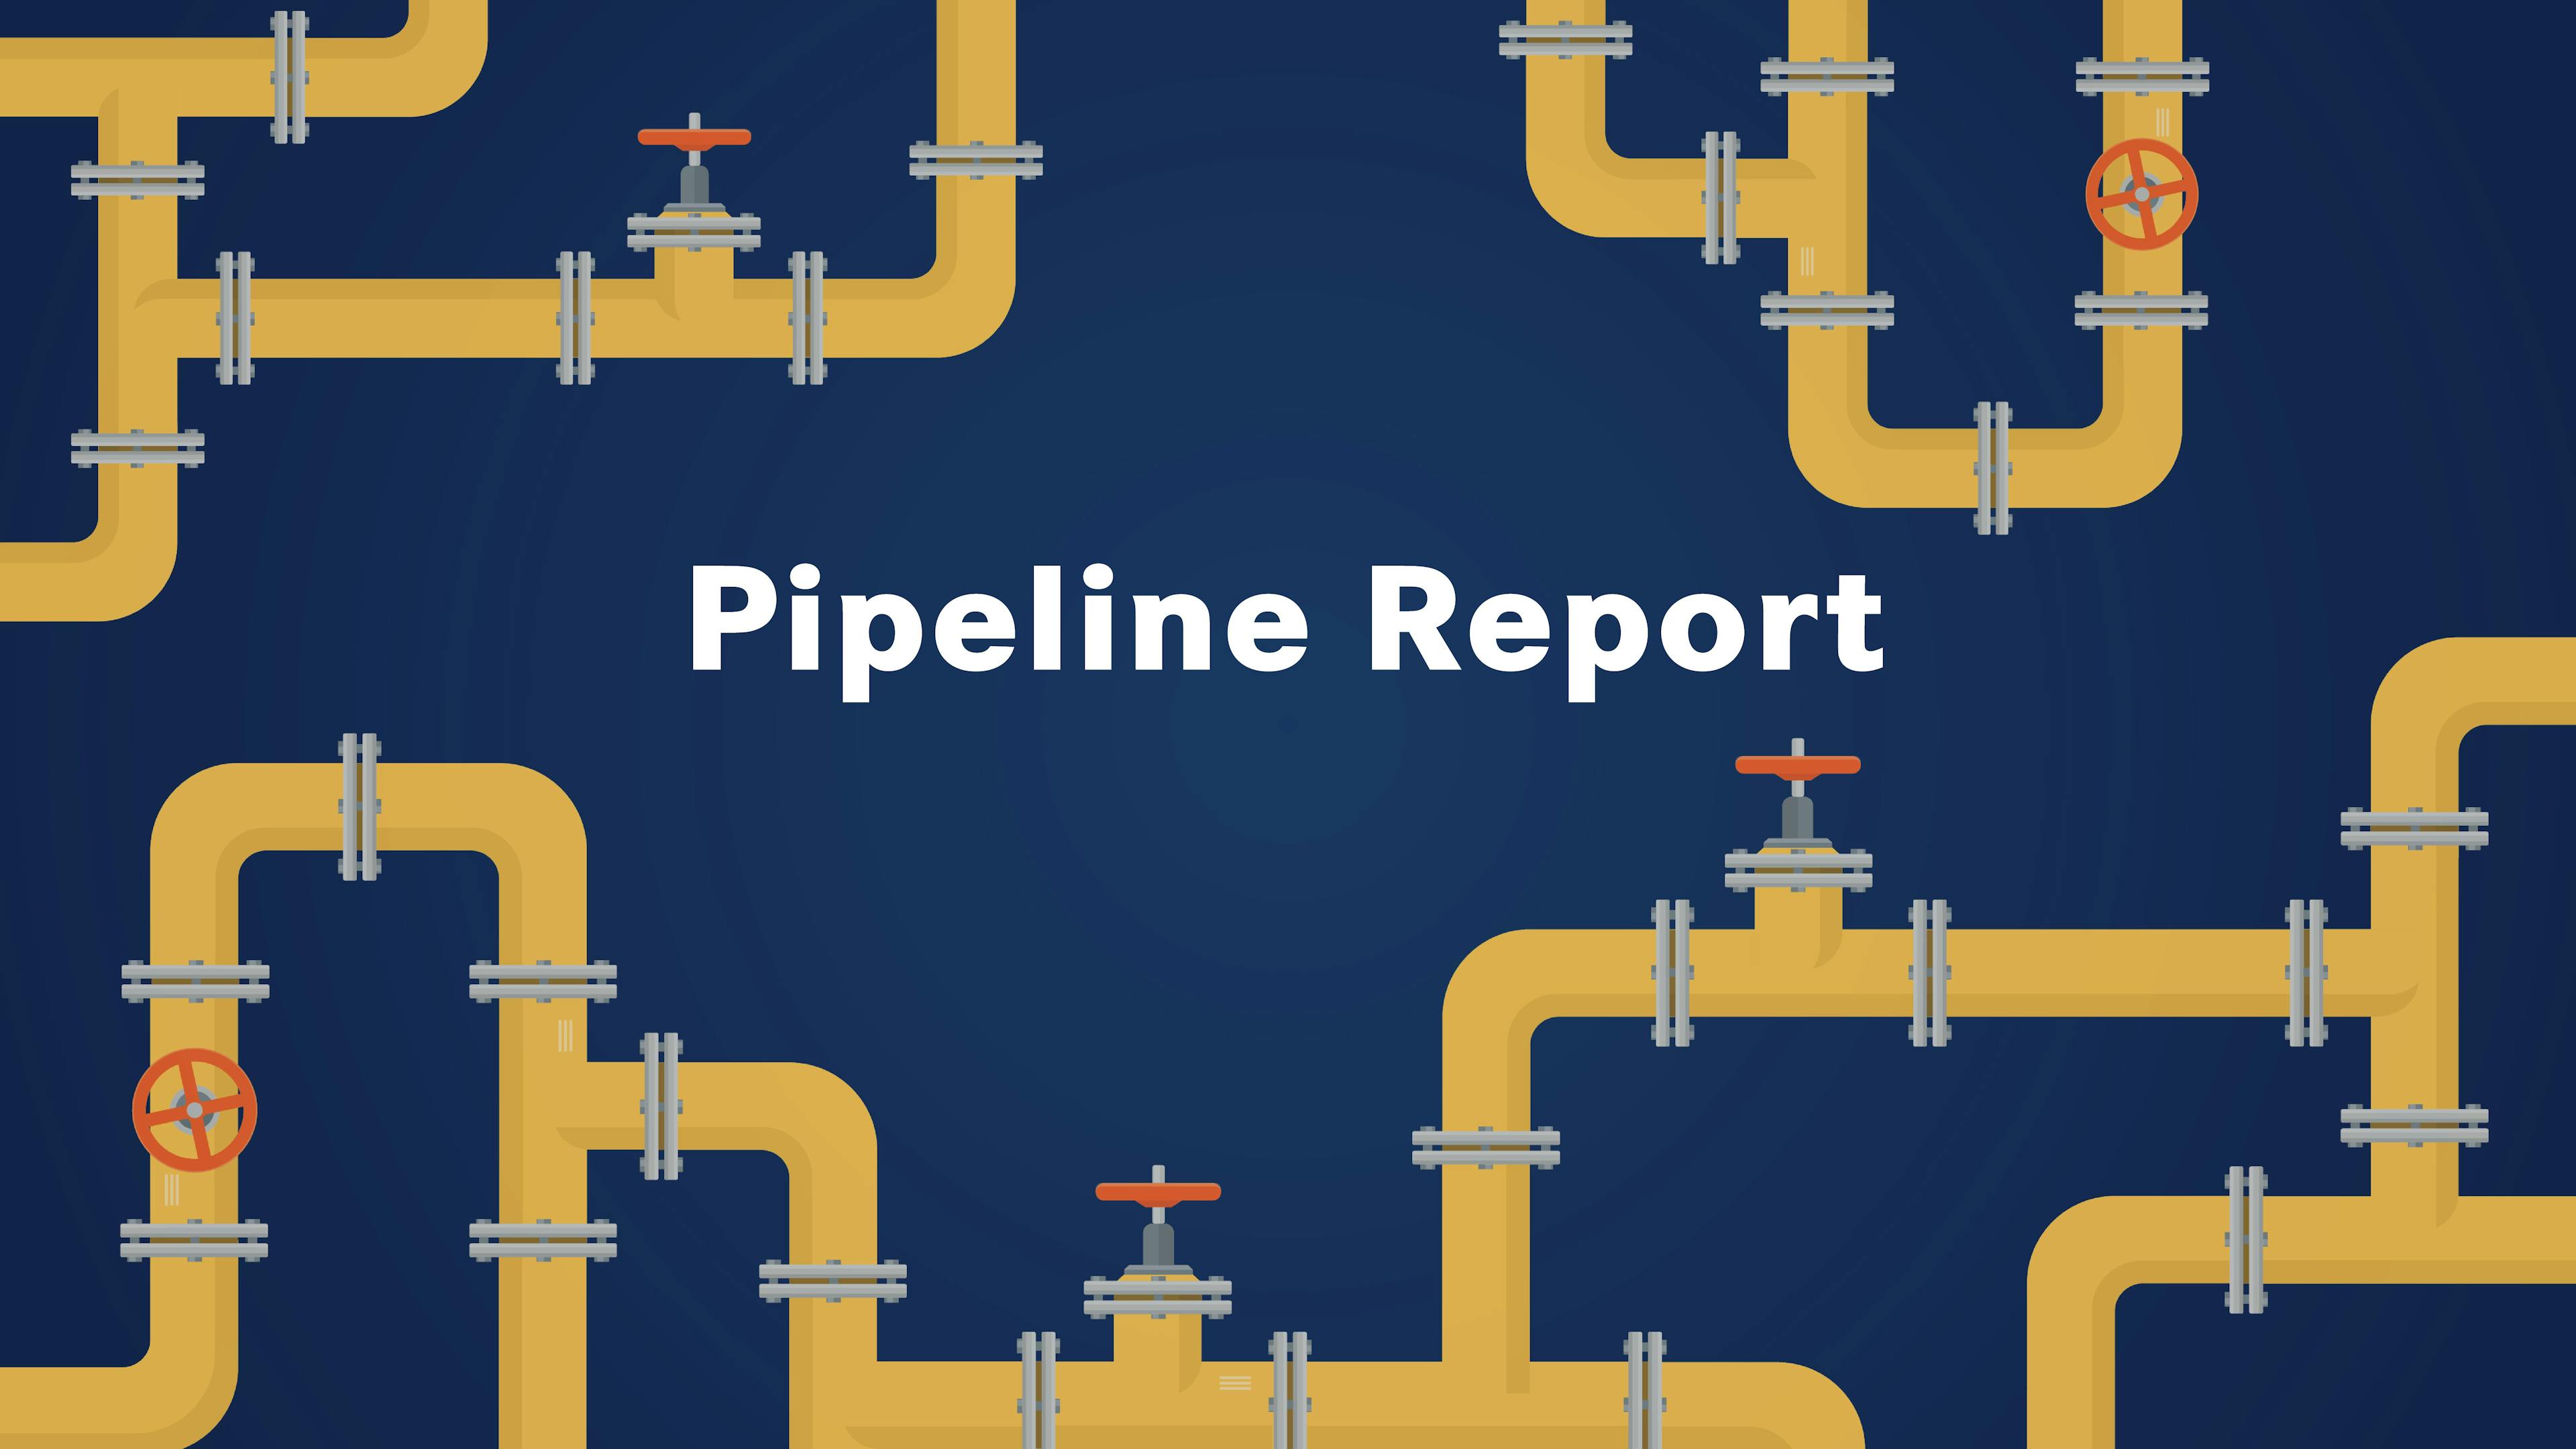 Pipeline Report